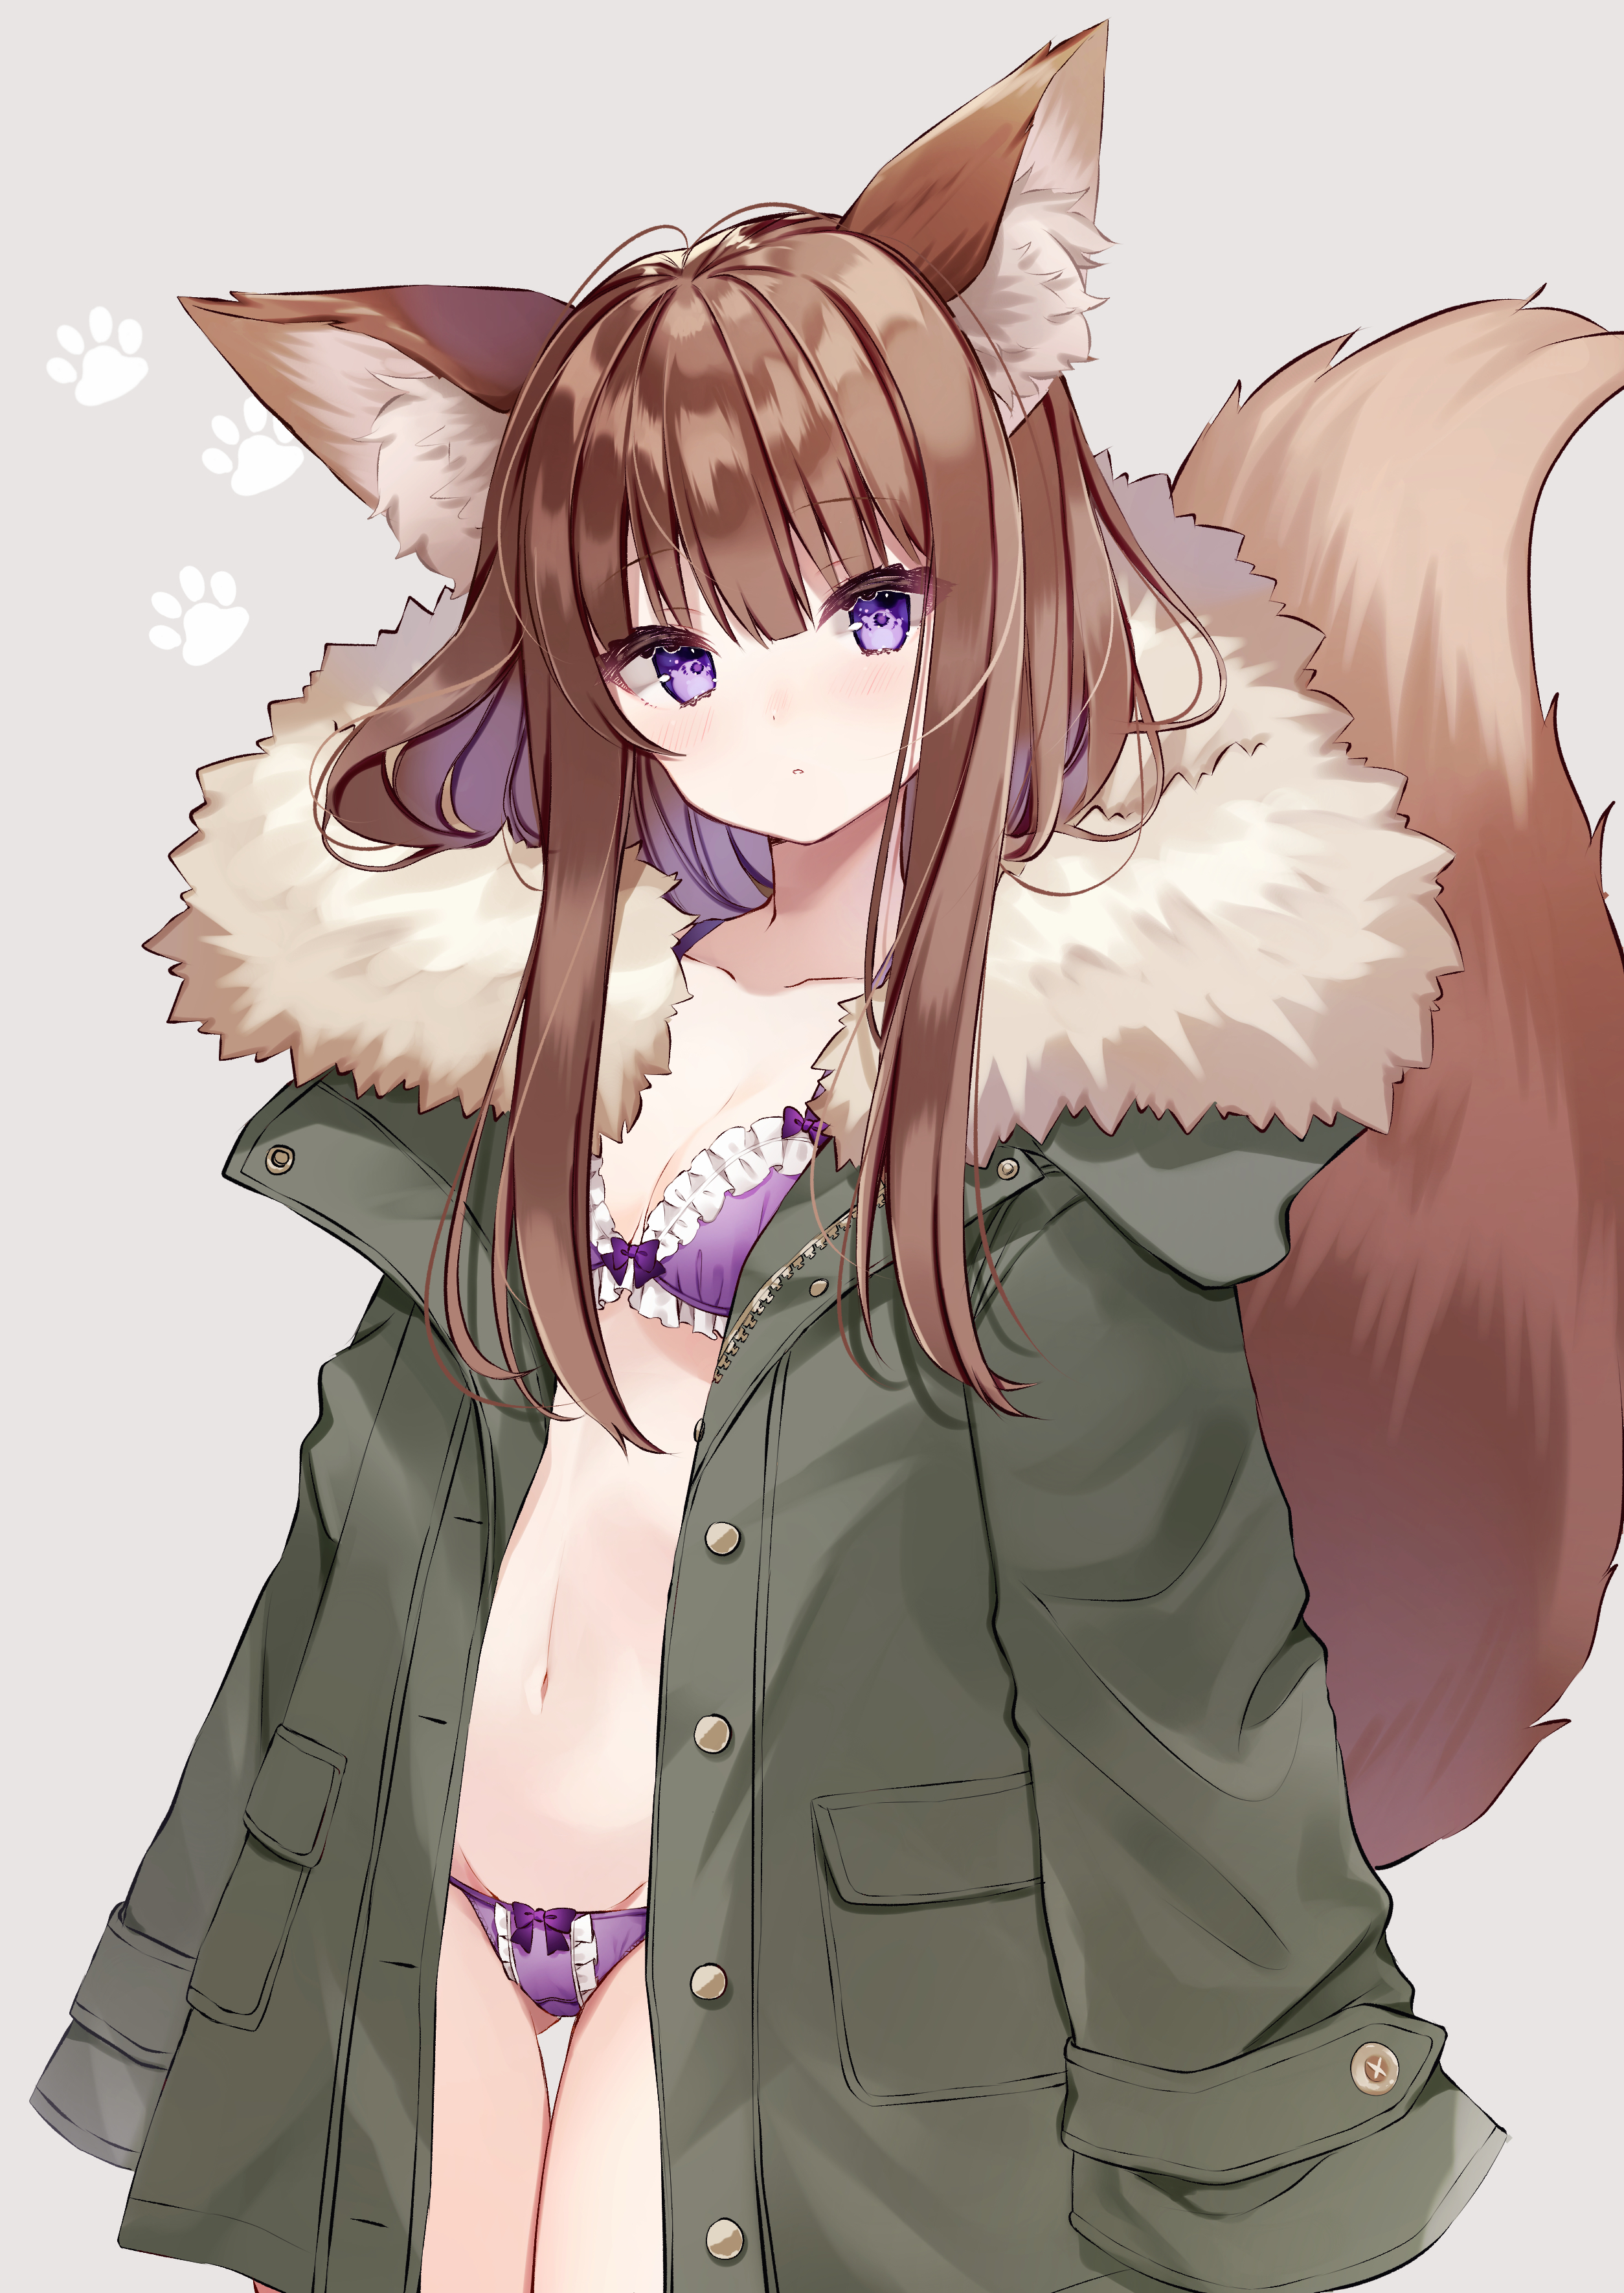 Anime 2508x3541 anime anime girls digital art artwork 2D portrait display Kotamun animal ears tail fox girl brunette purple eyes open coat underwear